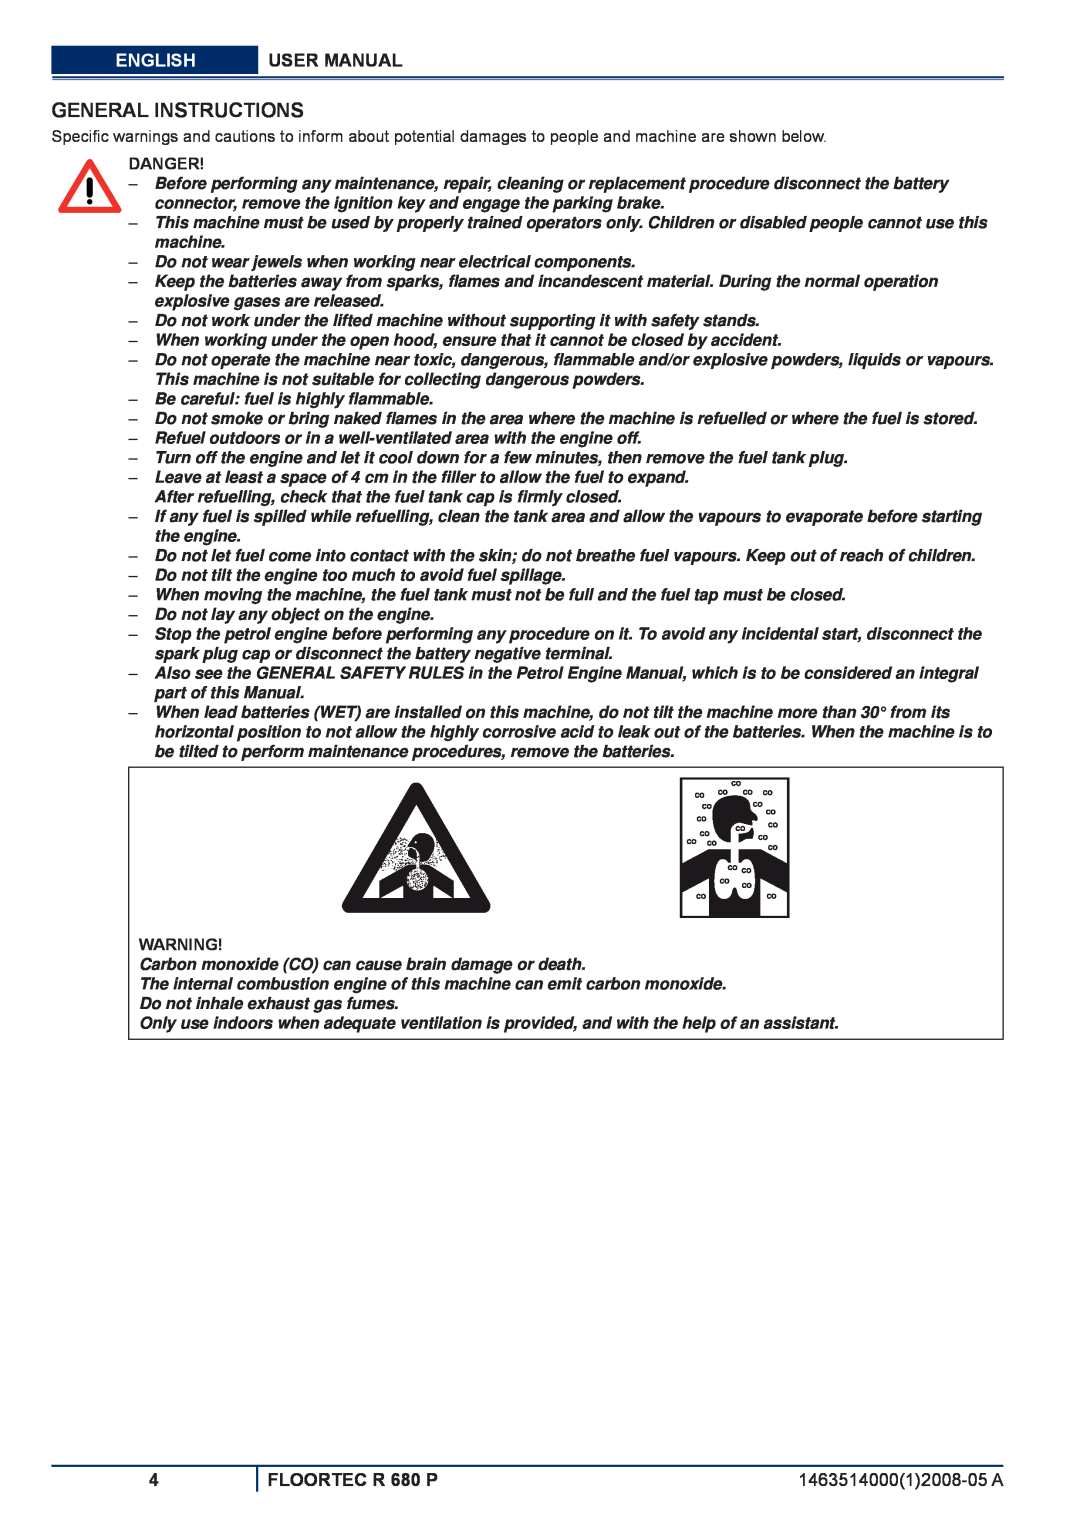 Nilfisk-ALTO manuel dutilisation General Instructions, English, User Manual, FLOORTEC R 680 P, Danger 